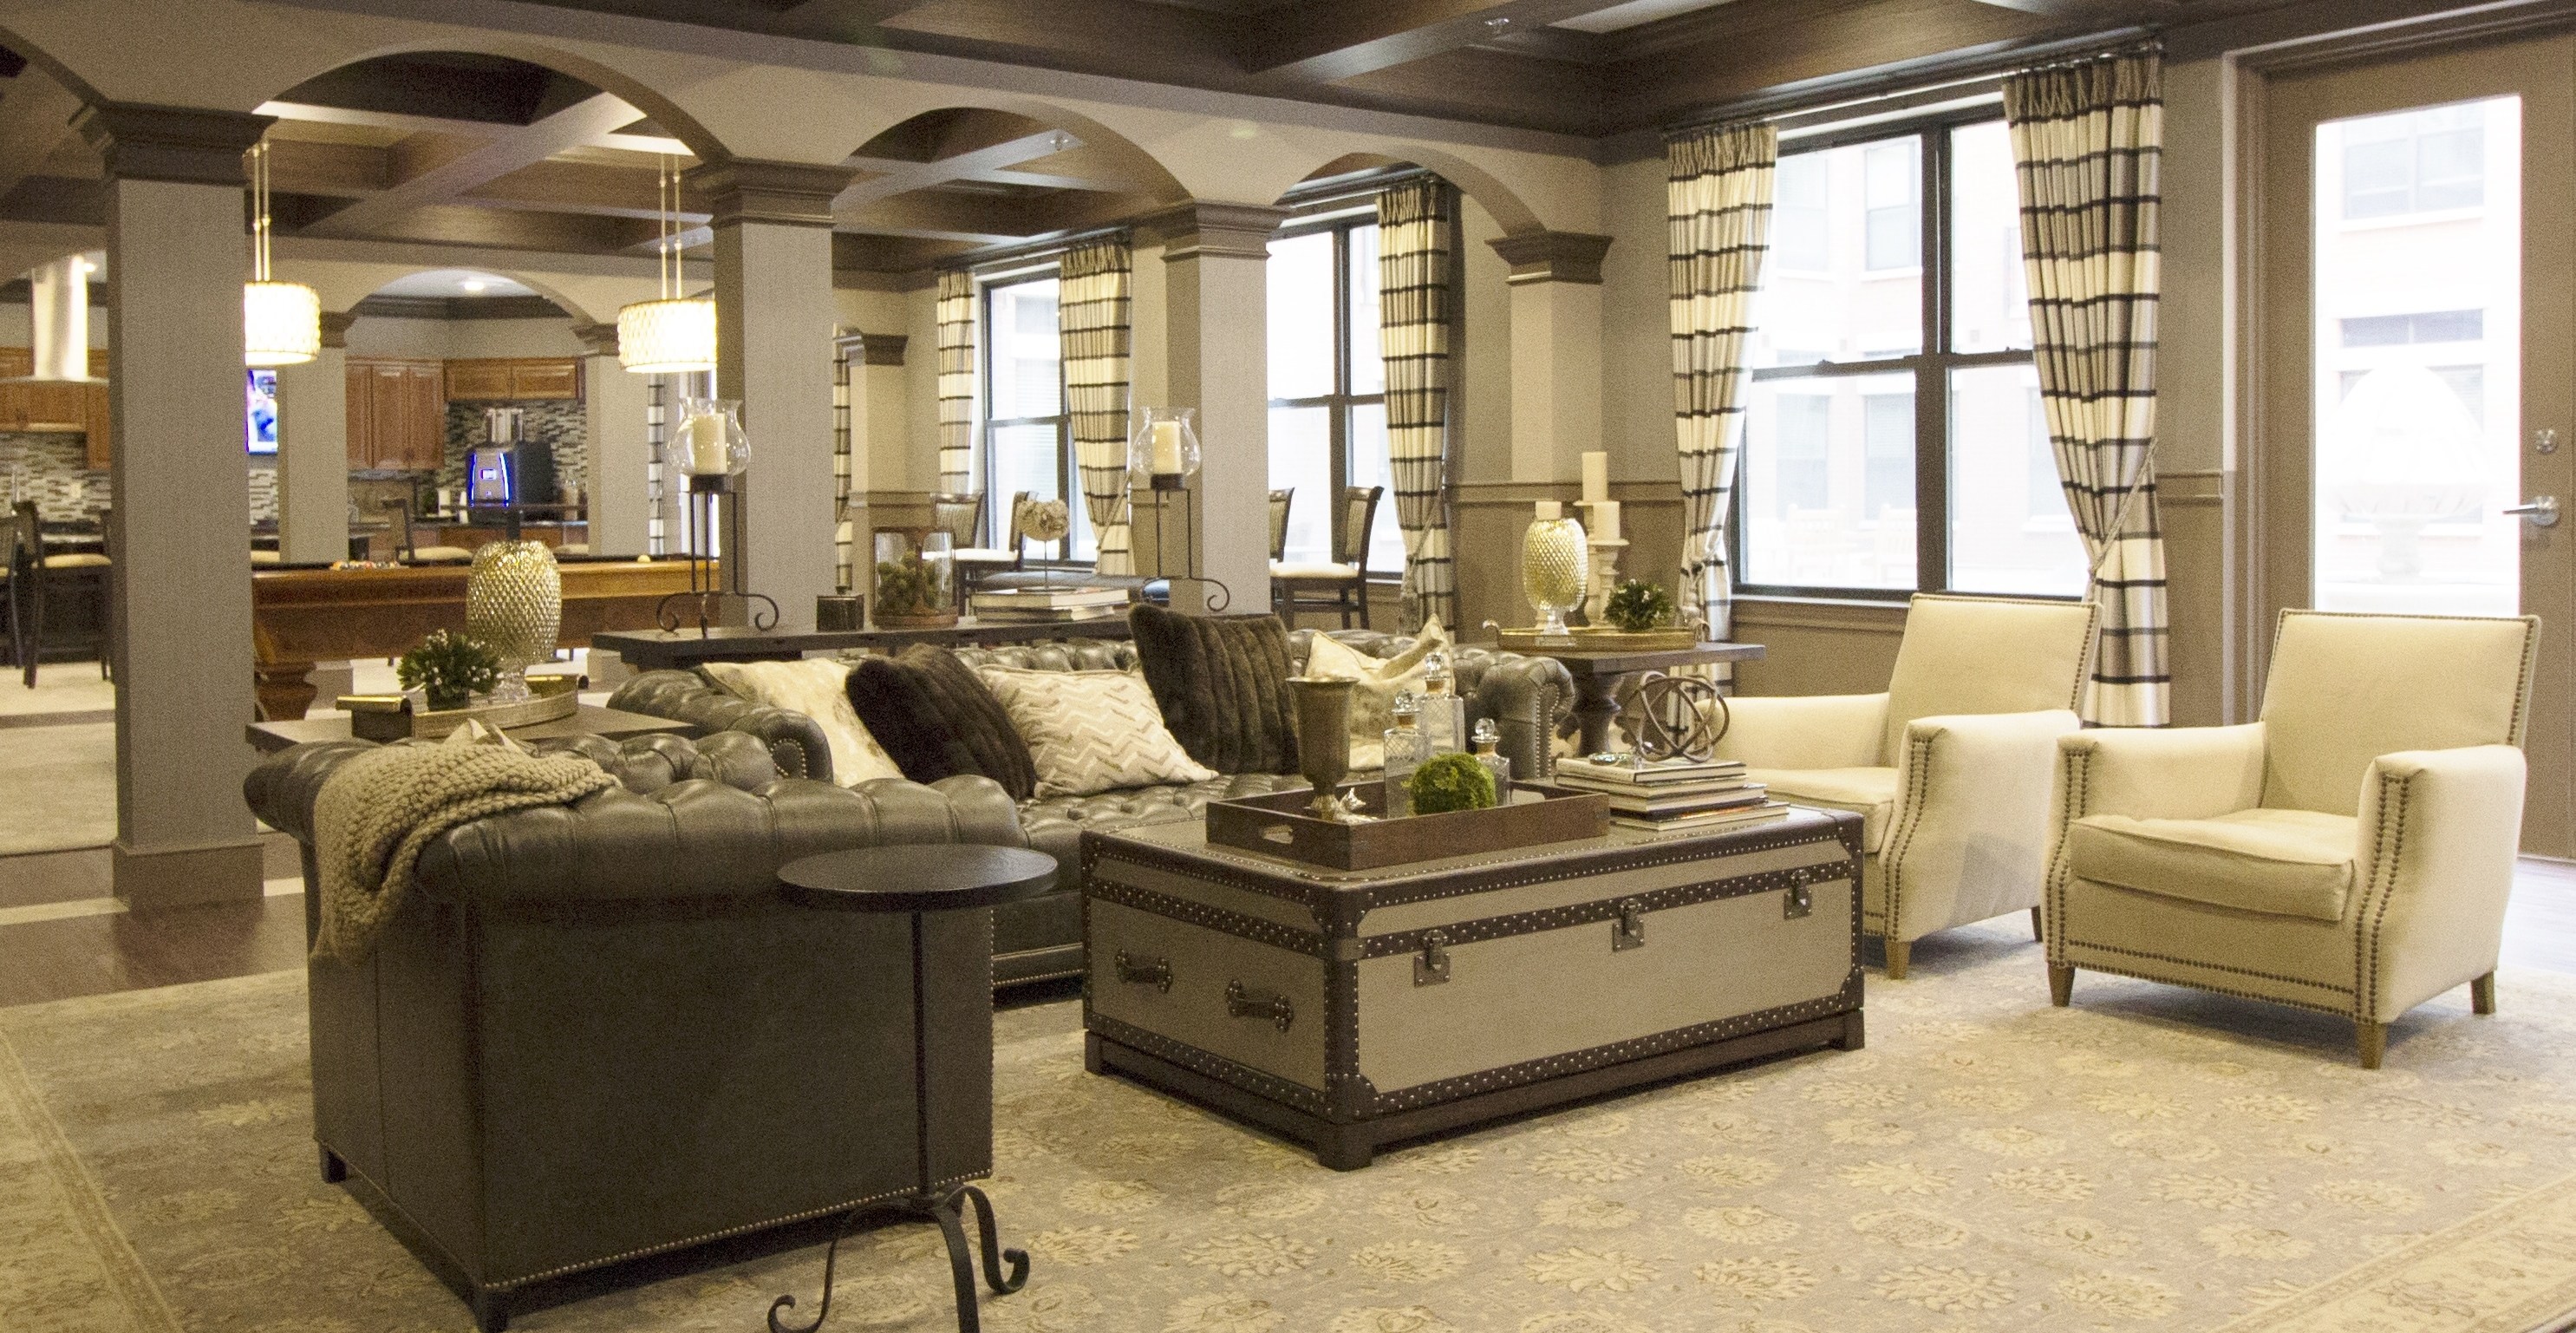 Top Furniture Stores St Louis Mo Area | NAR Media Kit